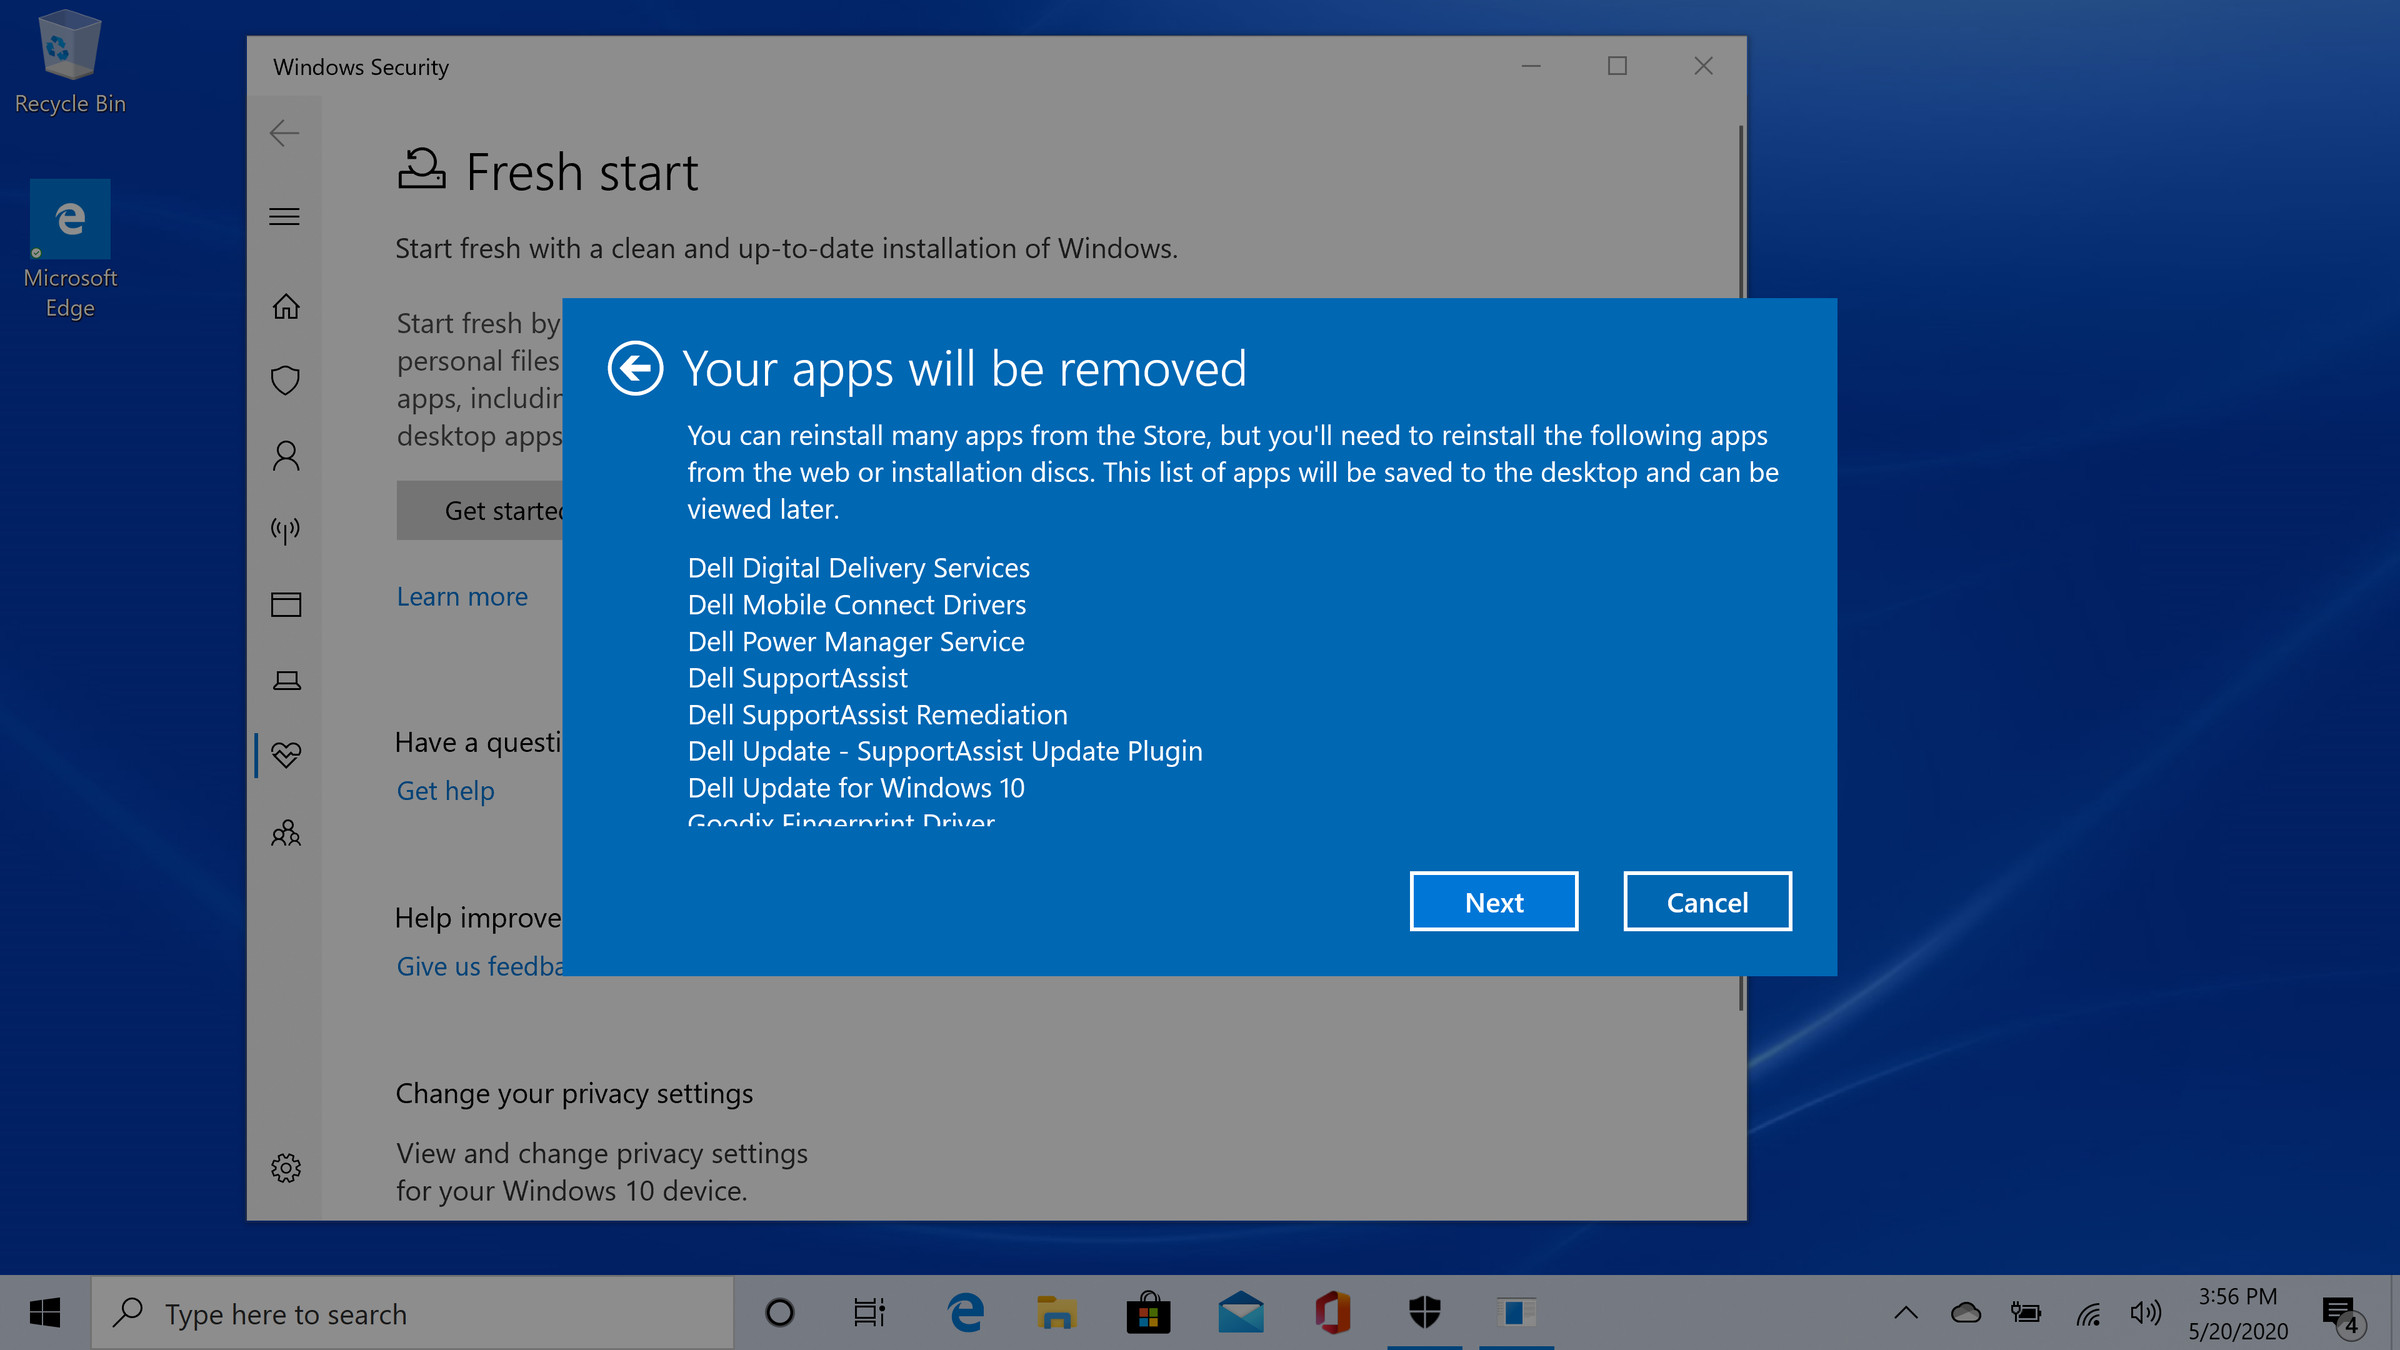 Windows 10 Fresh start